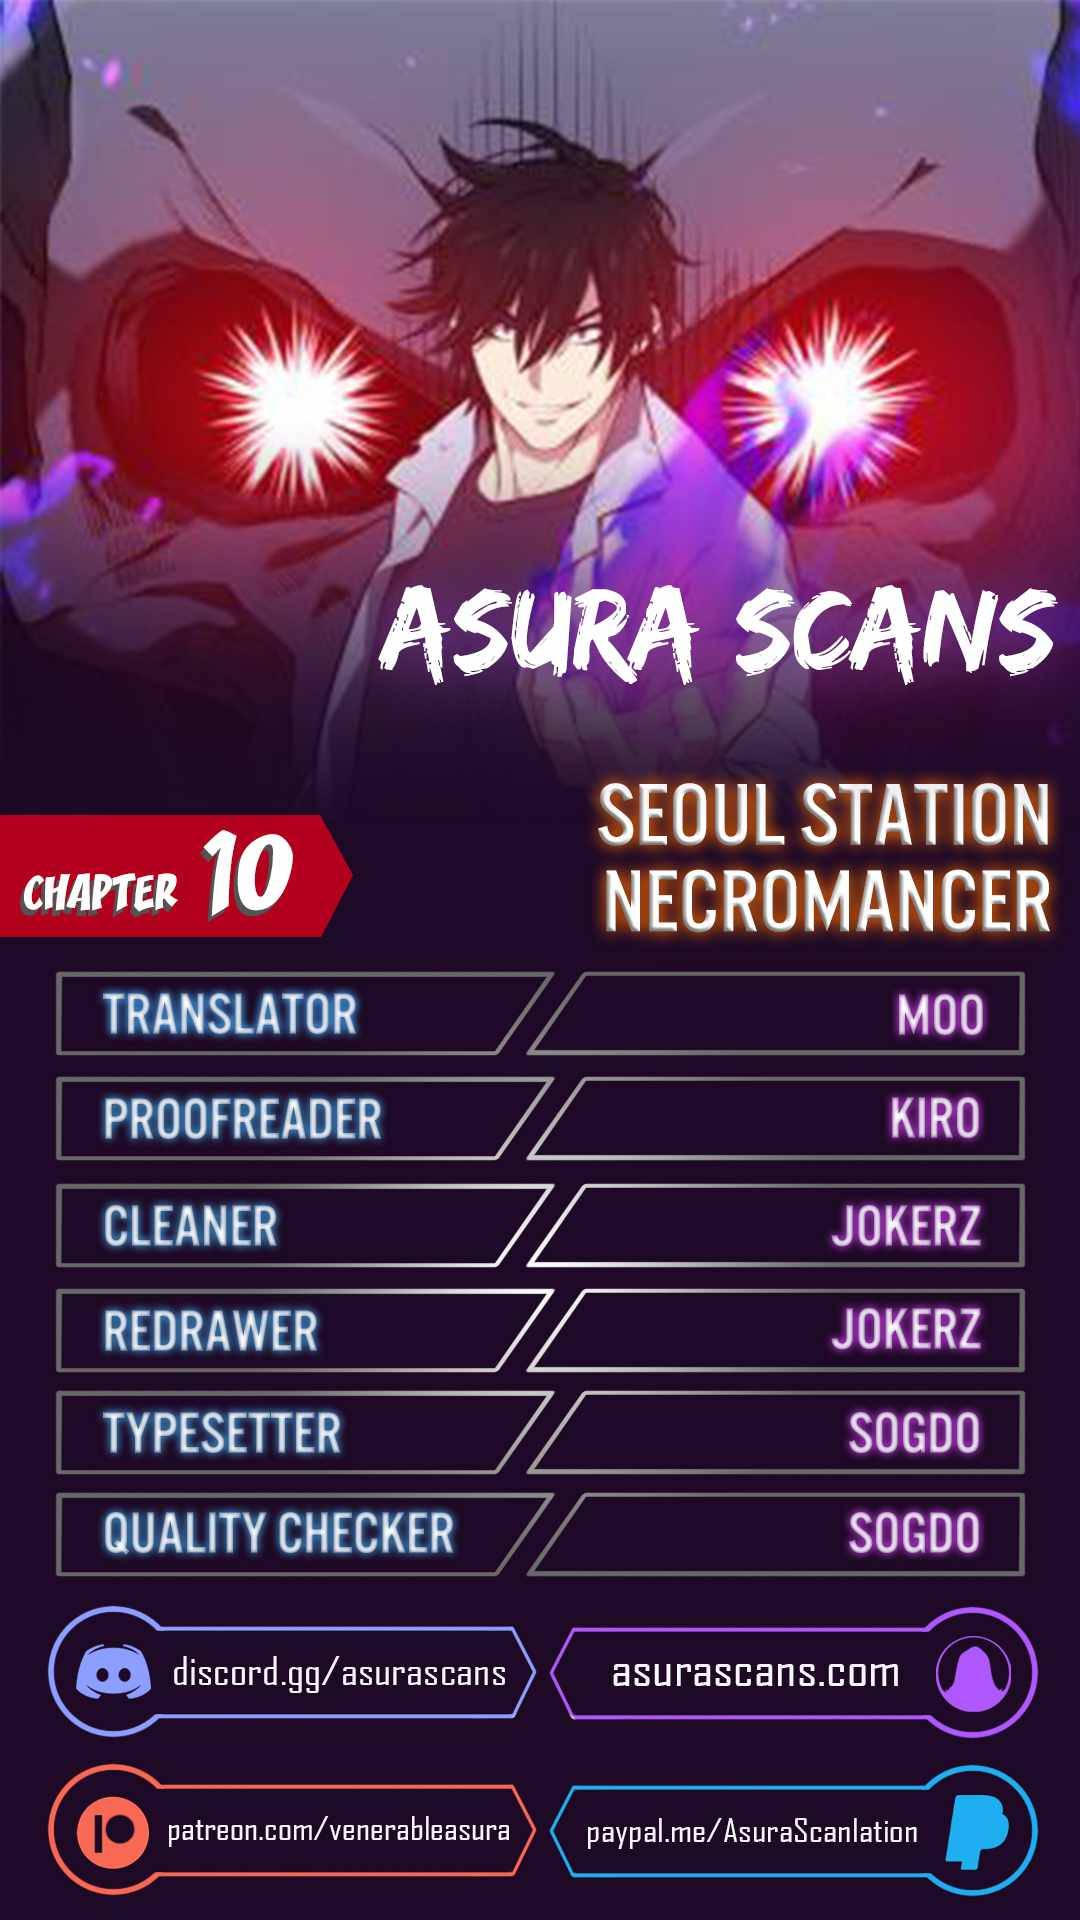 Seoul Station’s Necromancer Chapter 10